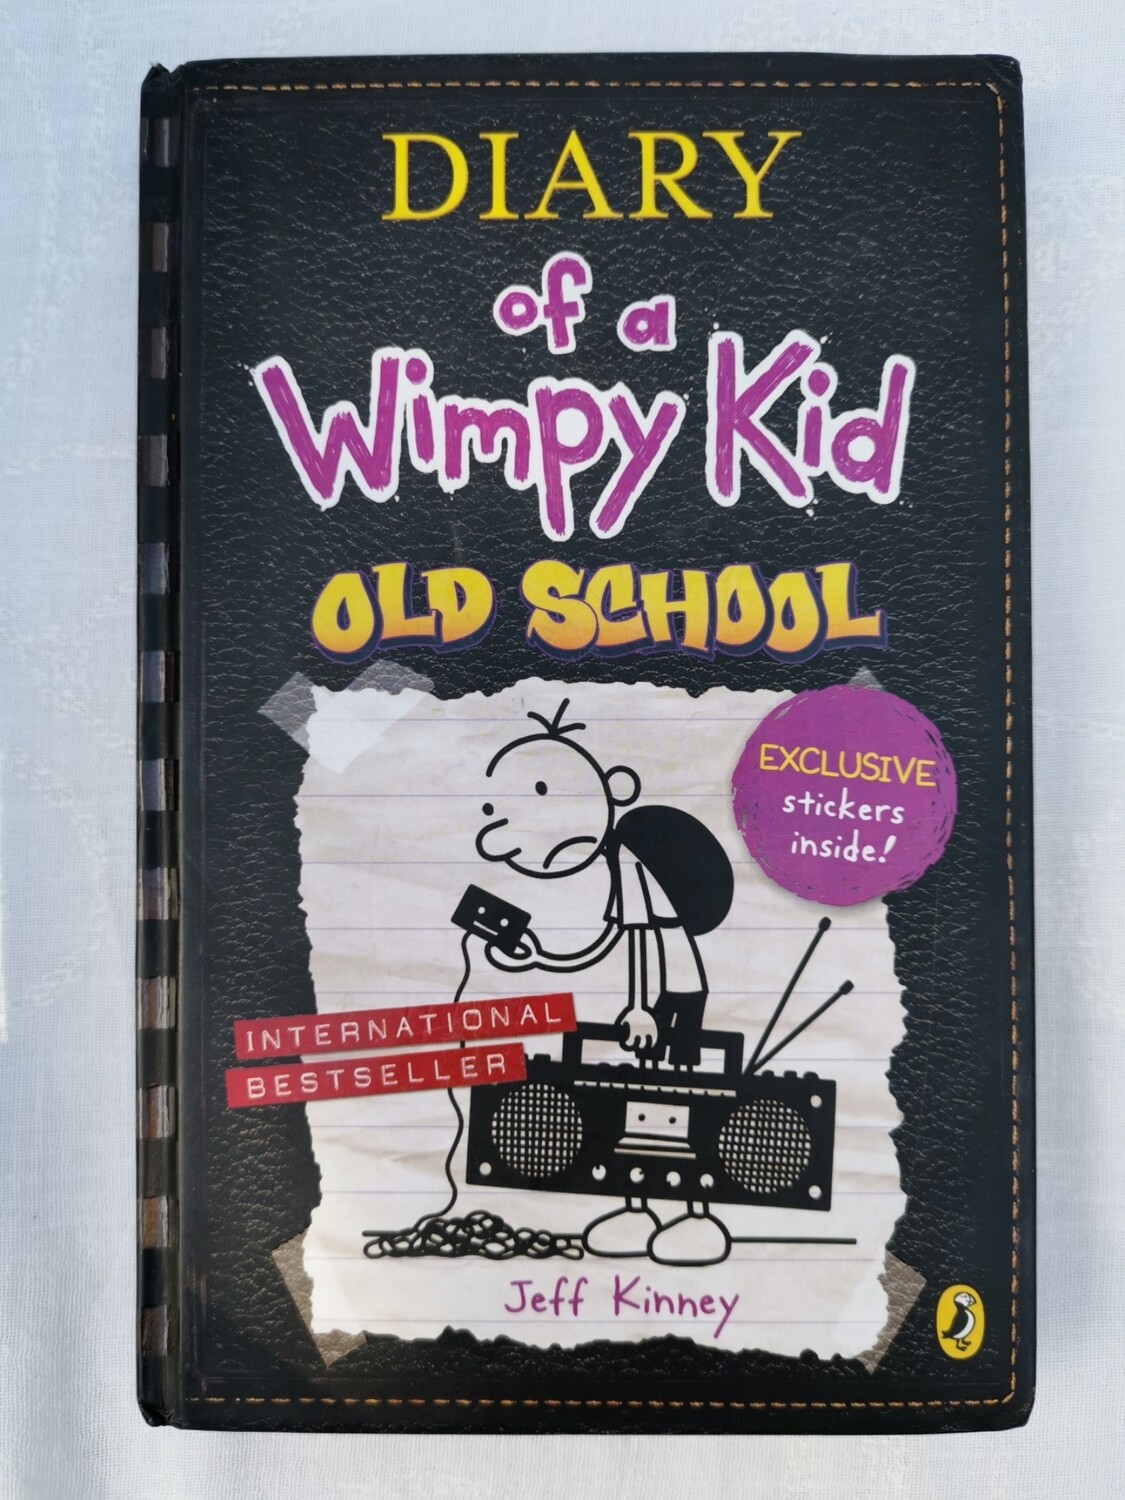 Diary of a Wimpy kid, old school, Jeff Kinney